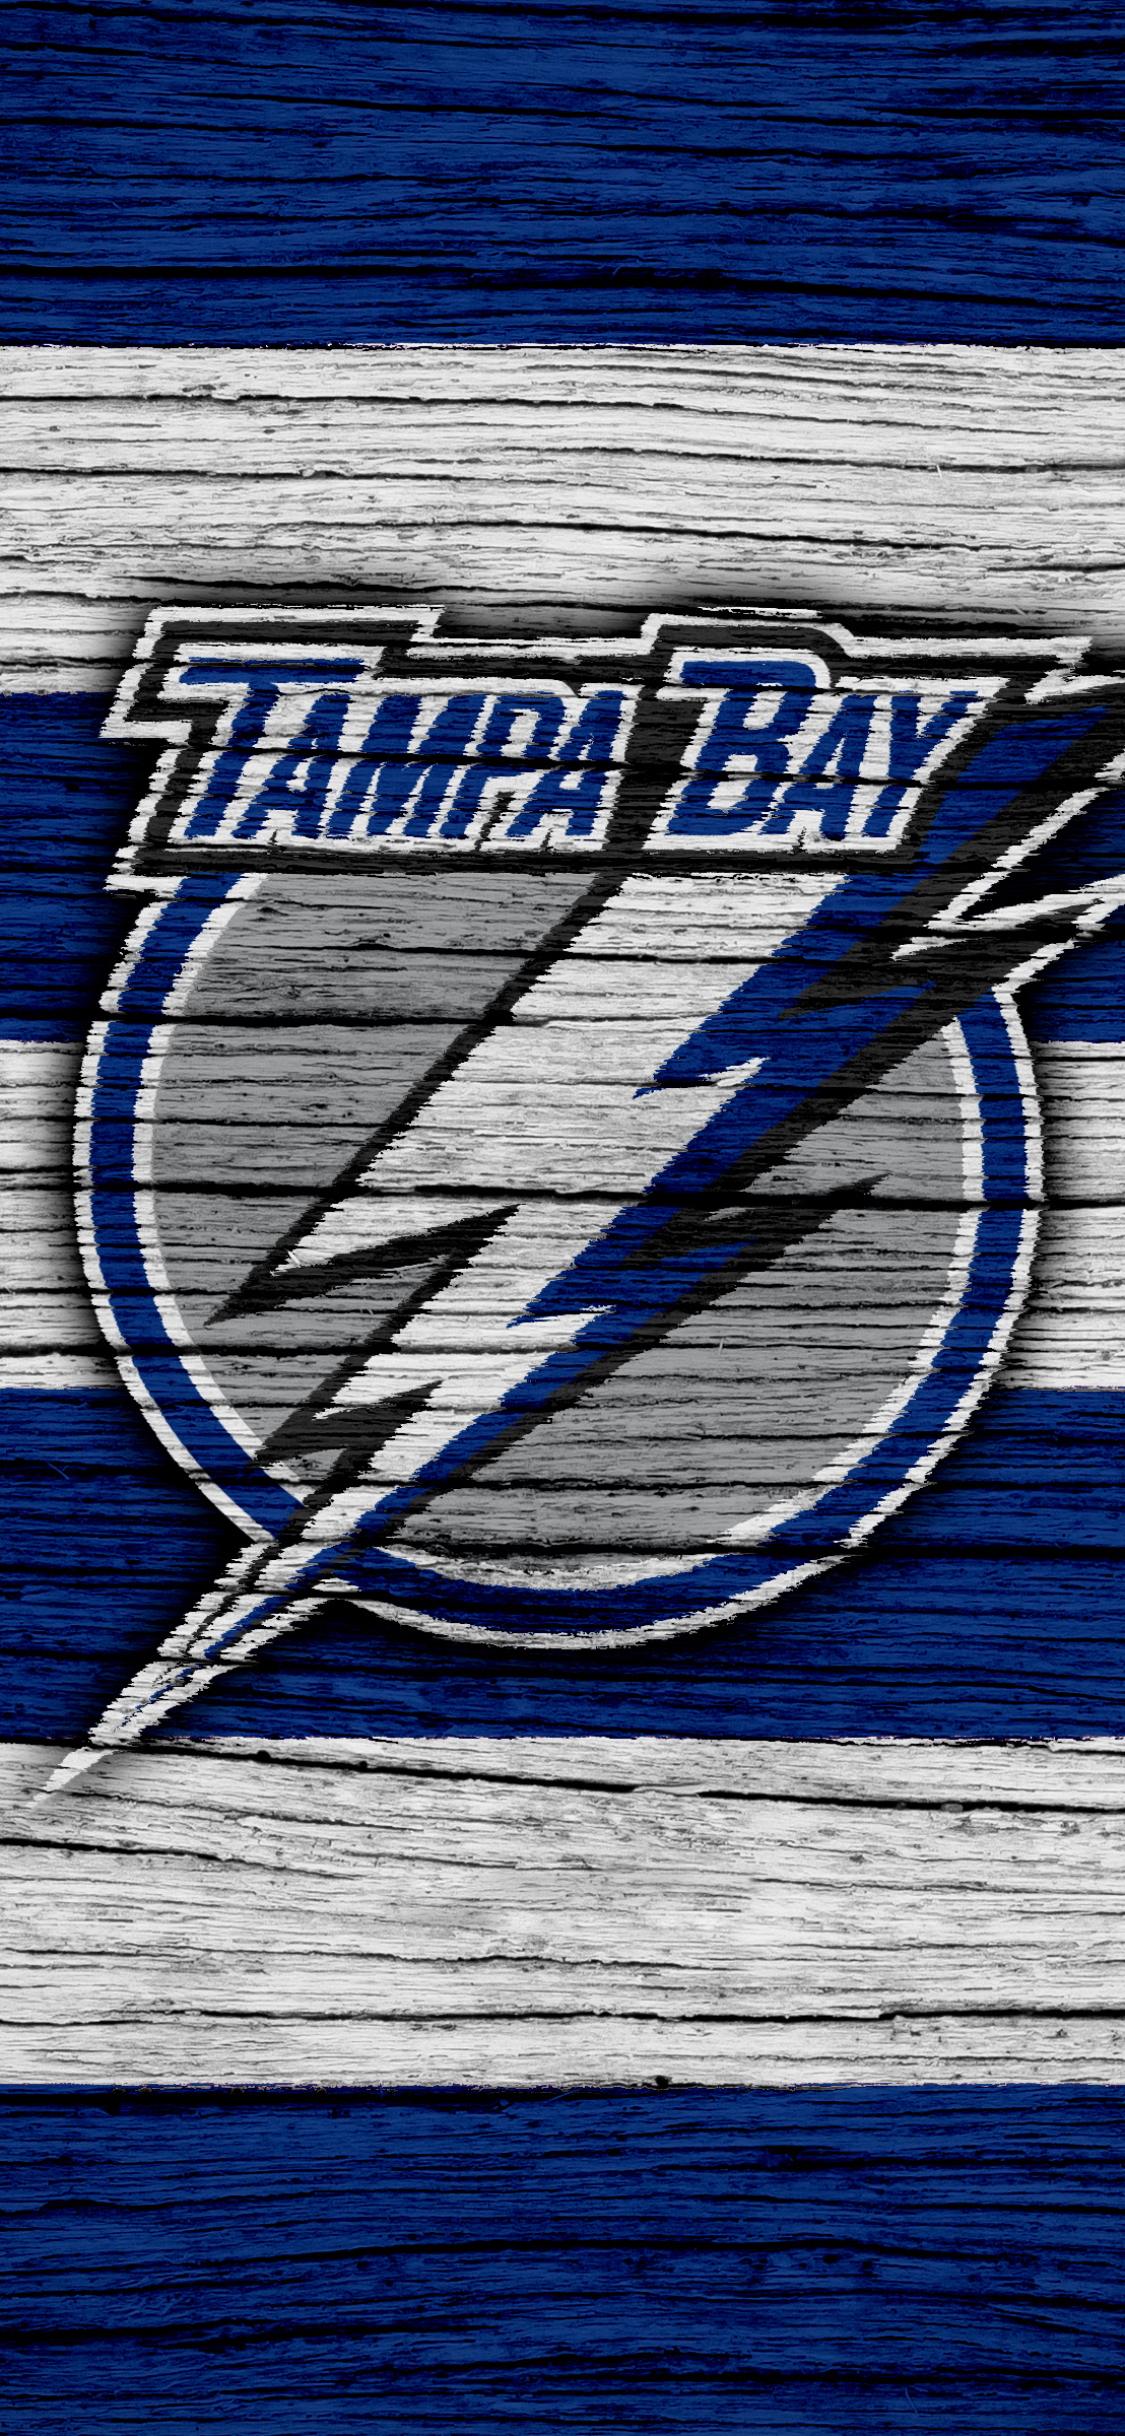 Tampa Bay Lightning Phone Wallpaper - Mobile Abyss